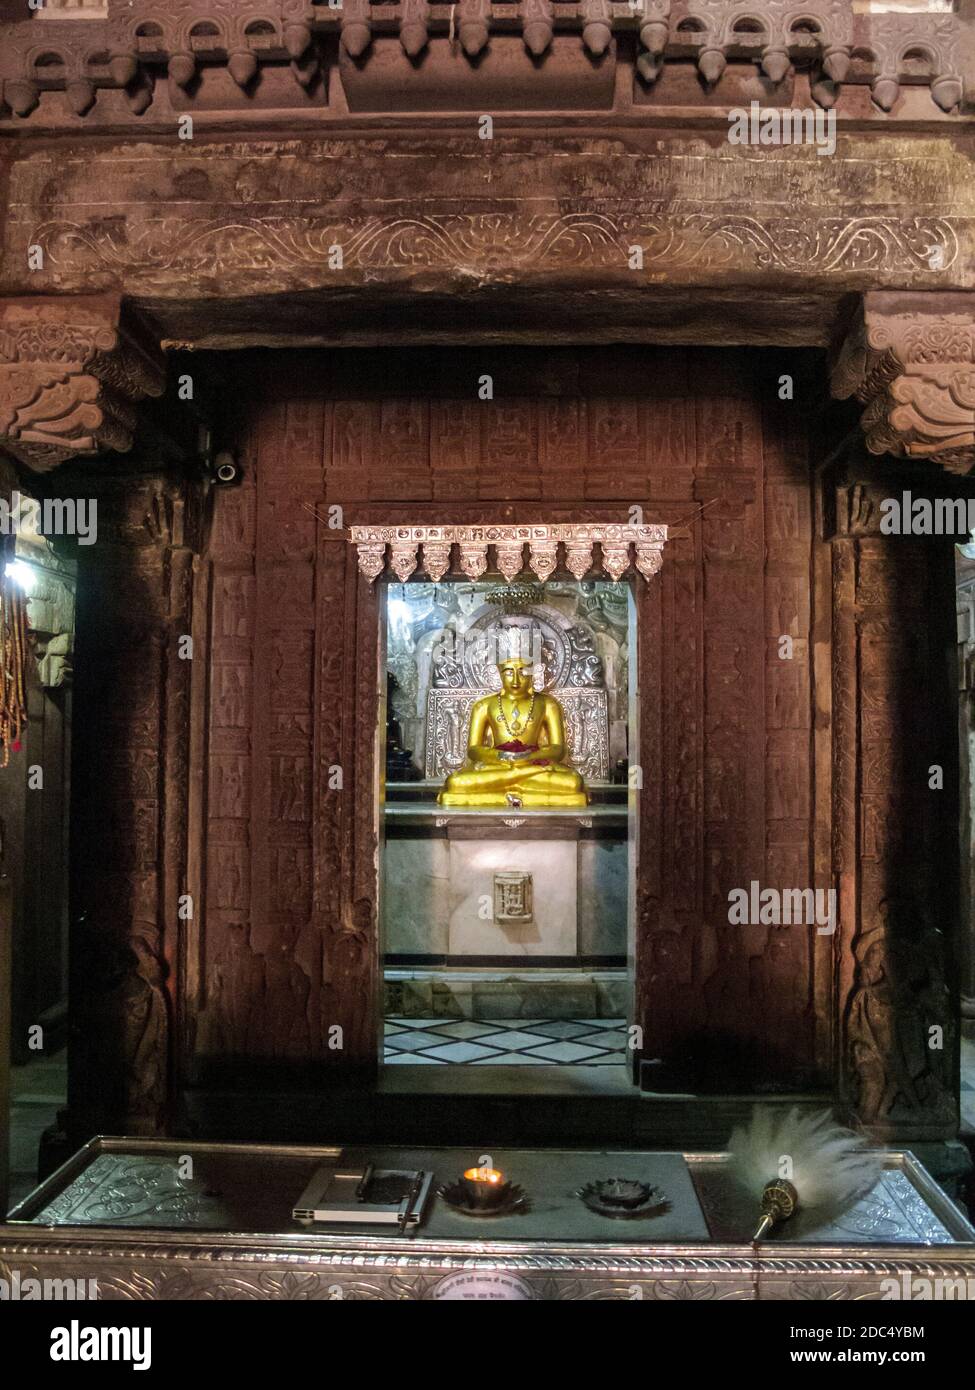 India, Rajasthan, Osian, vicino Jodhpur. Antico tempio di Jain dedicato al 24° Jain Tirthankar Mahavir Swami. Statua del Signore Mahavira. 2500 anni. Foto Stock